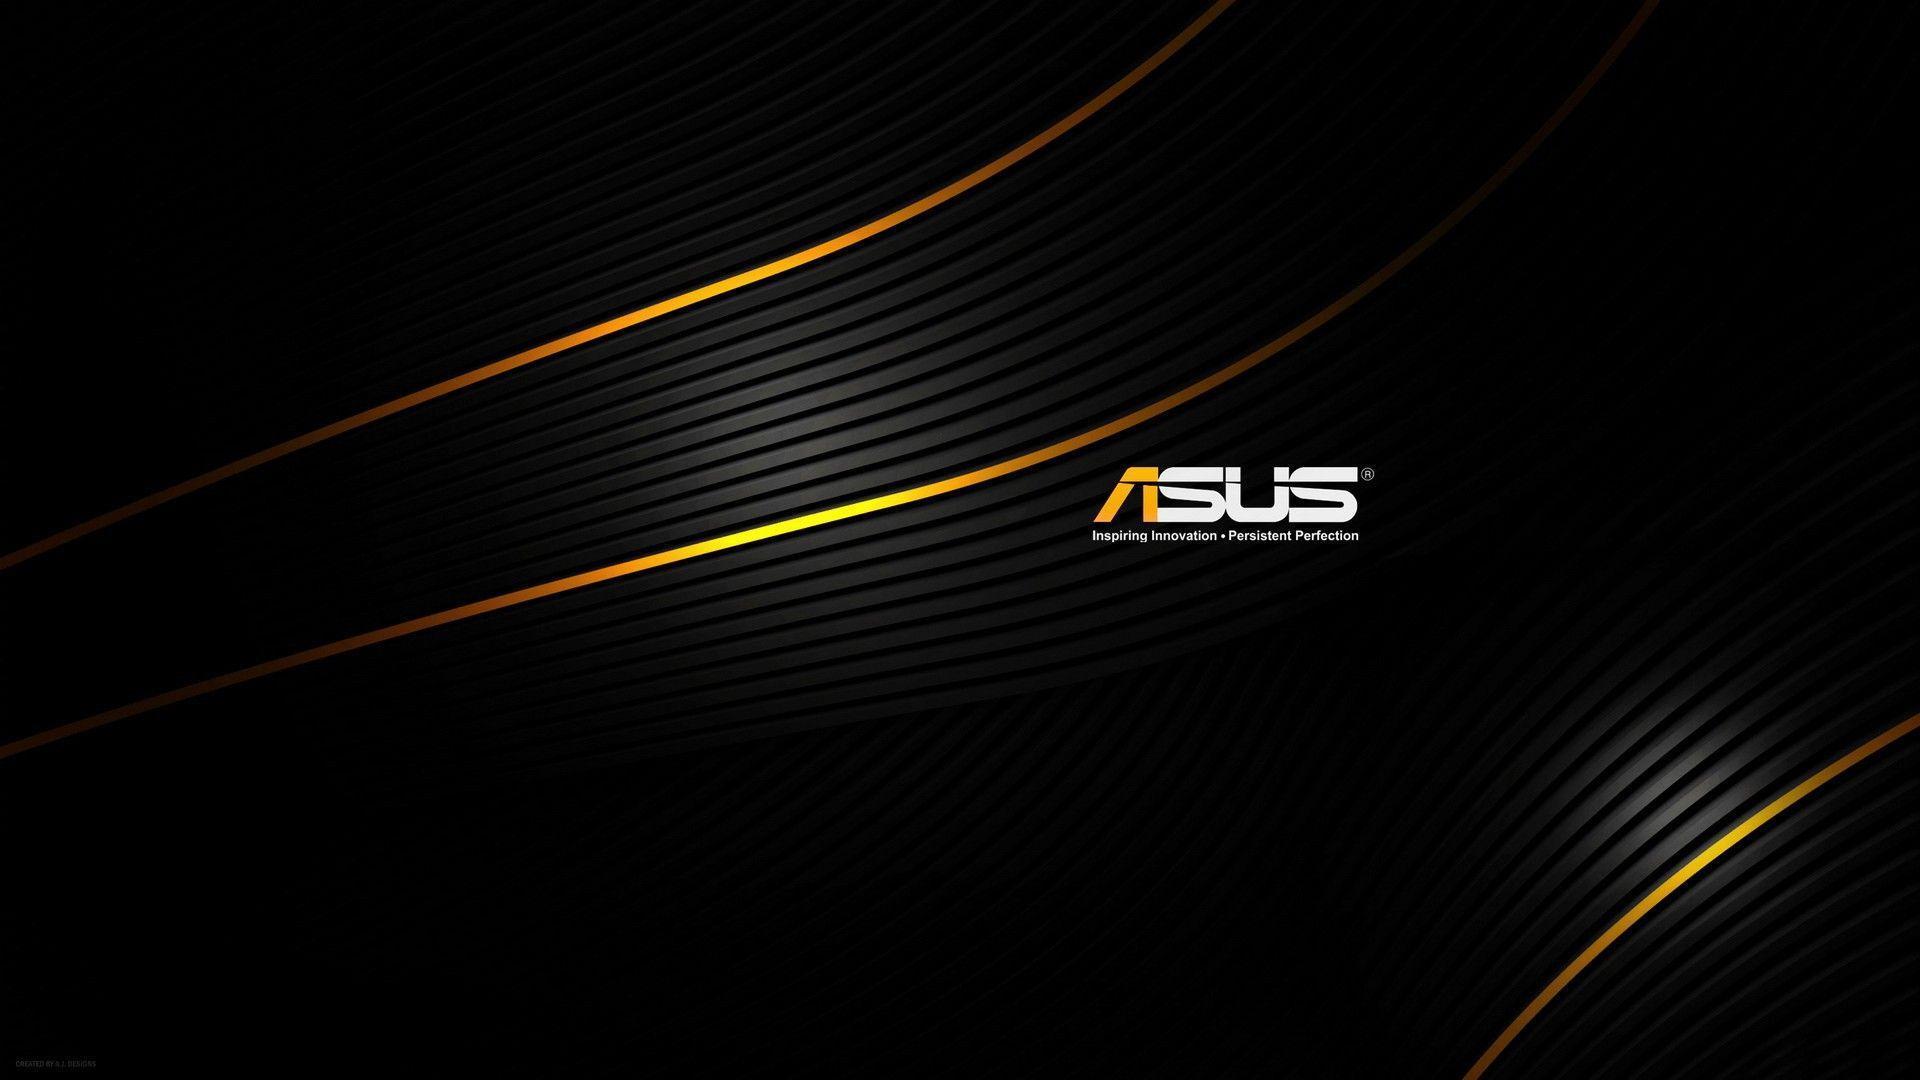 Asus Desktop Background 1920X1080